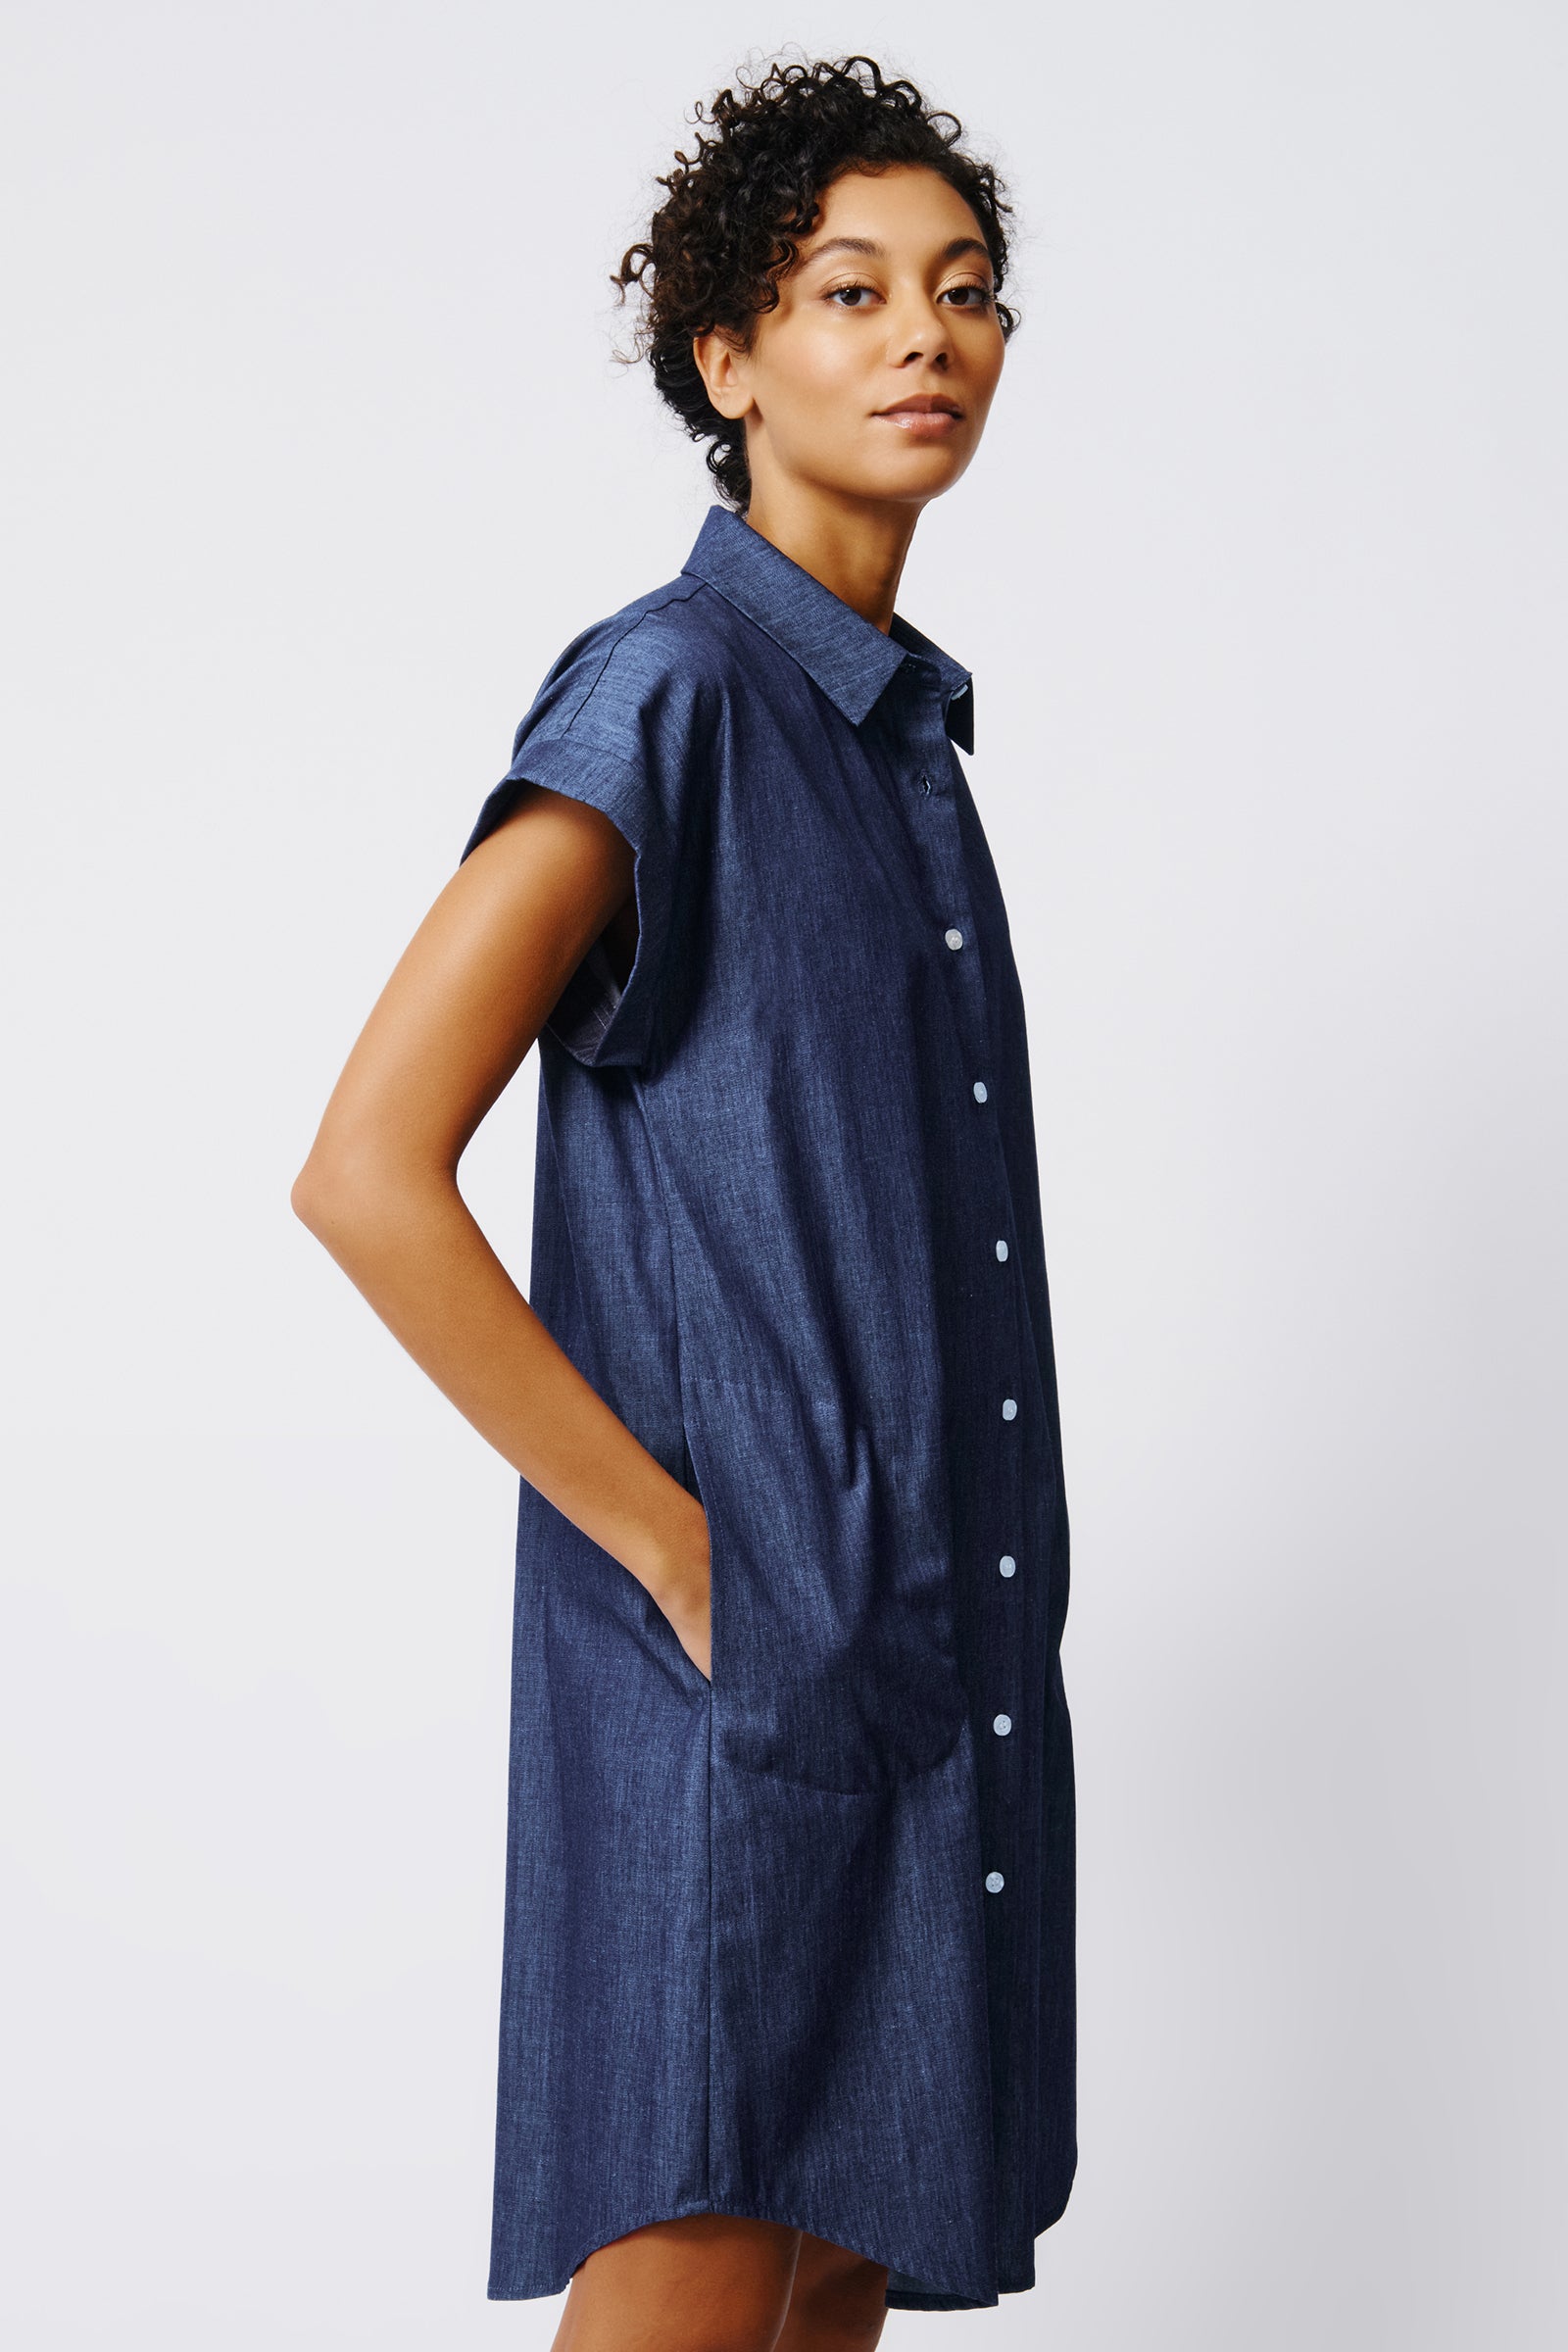 Kal Rieman Hedy Cuffed Cap Sleeve Shirt Dress in Classic Indigo on Model Side View Crop